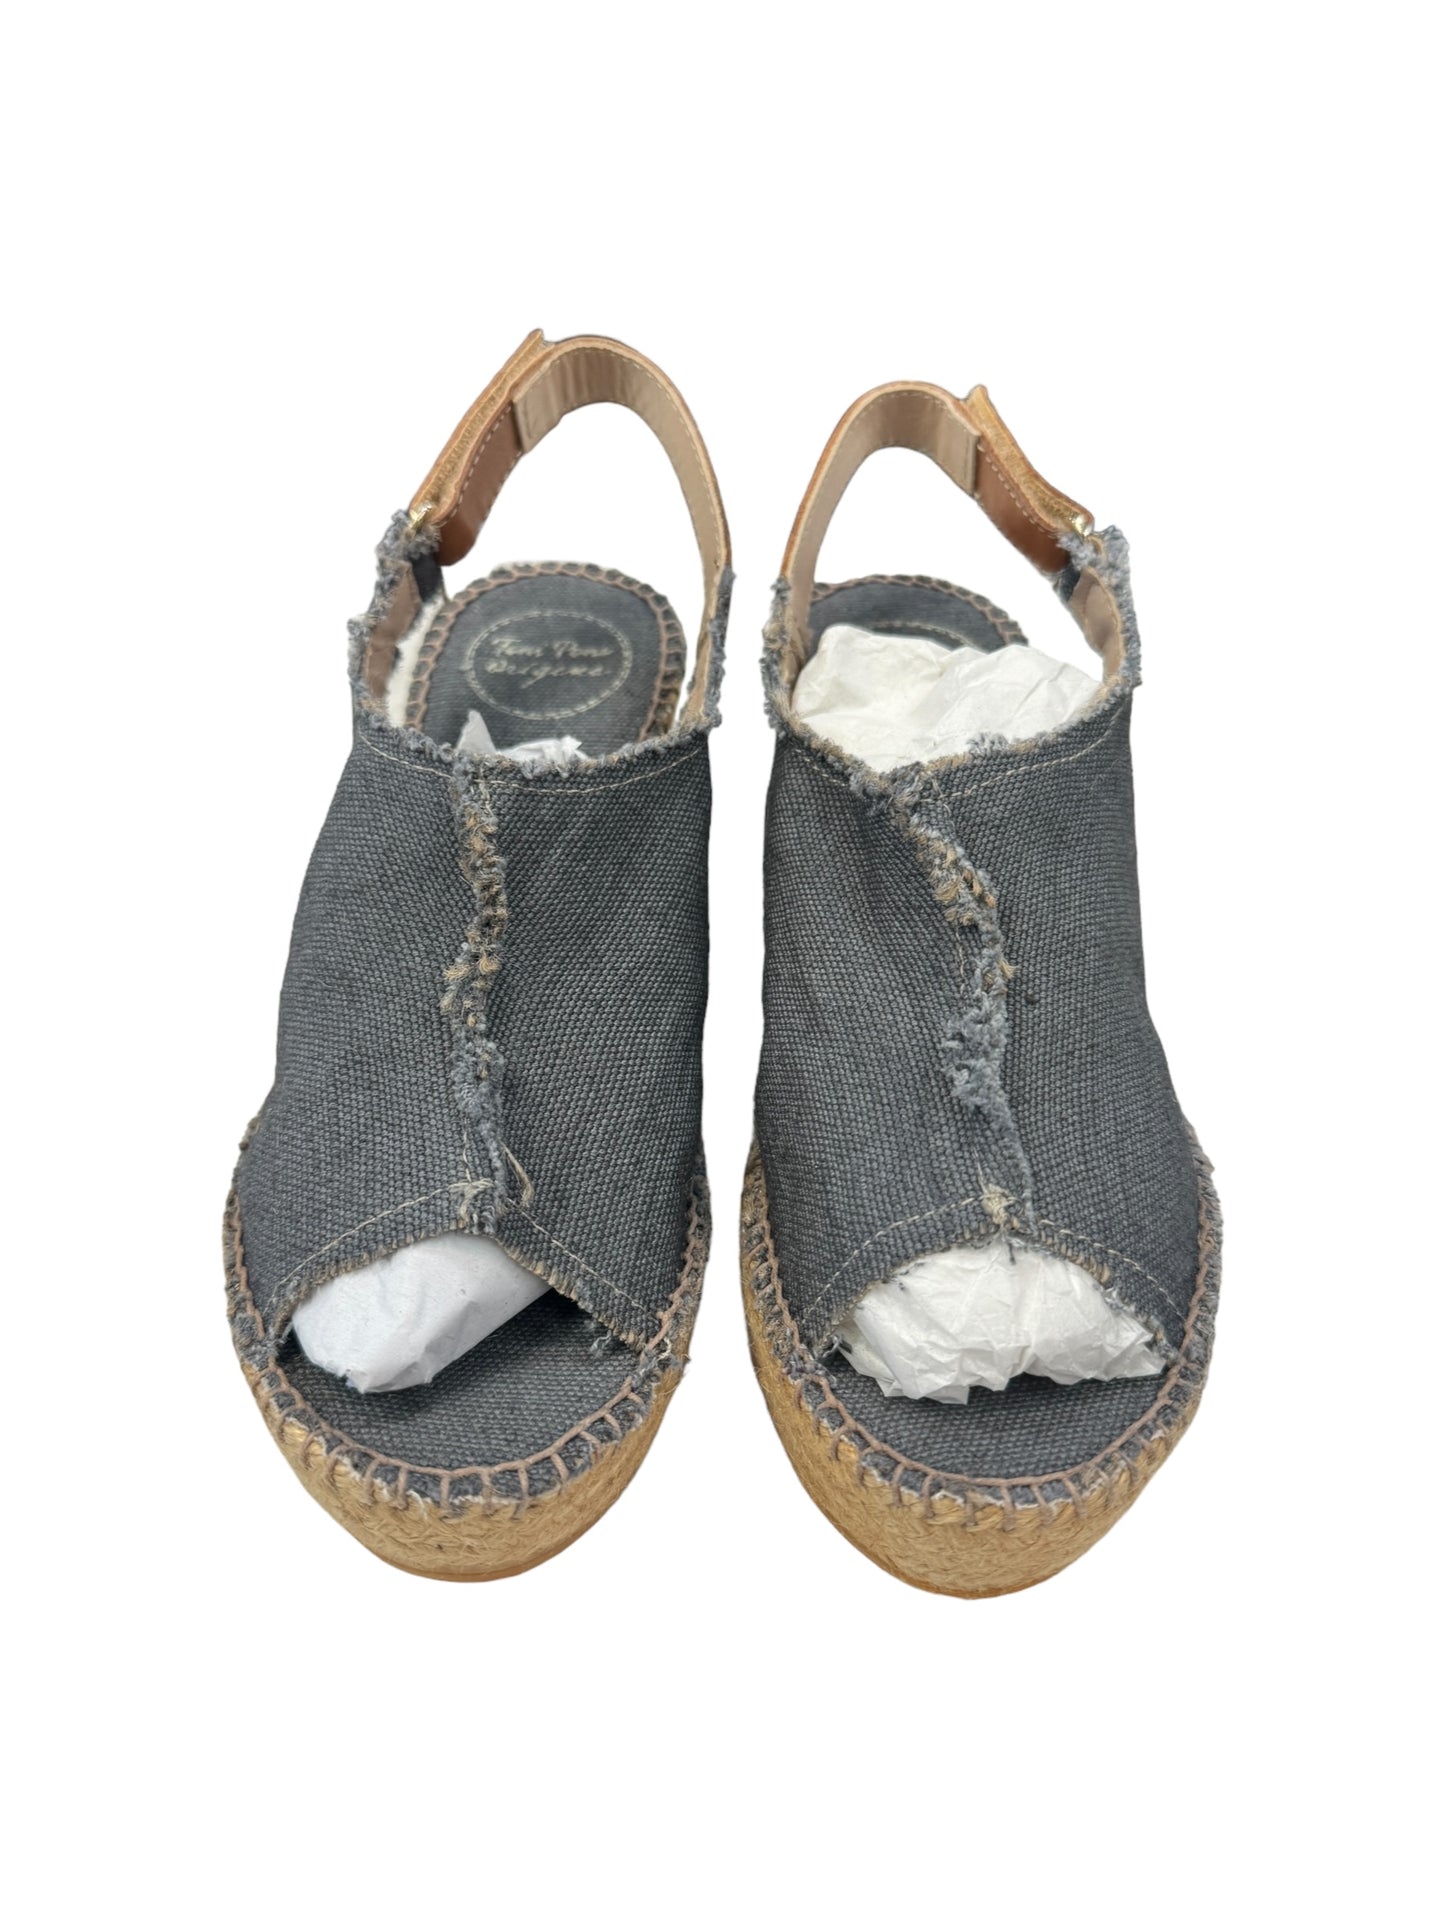 Sandals Heels Platform By Cma  Size: 6.5